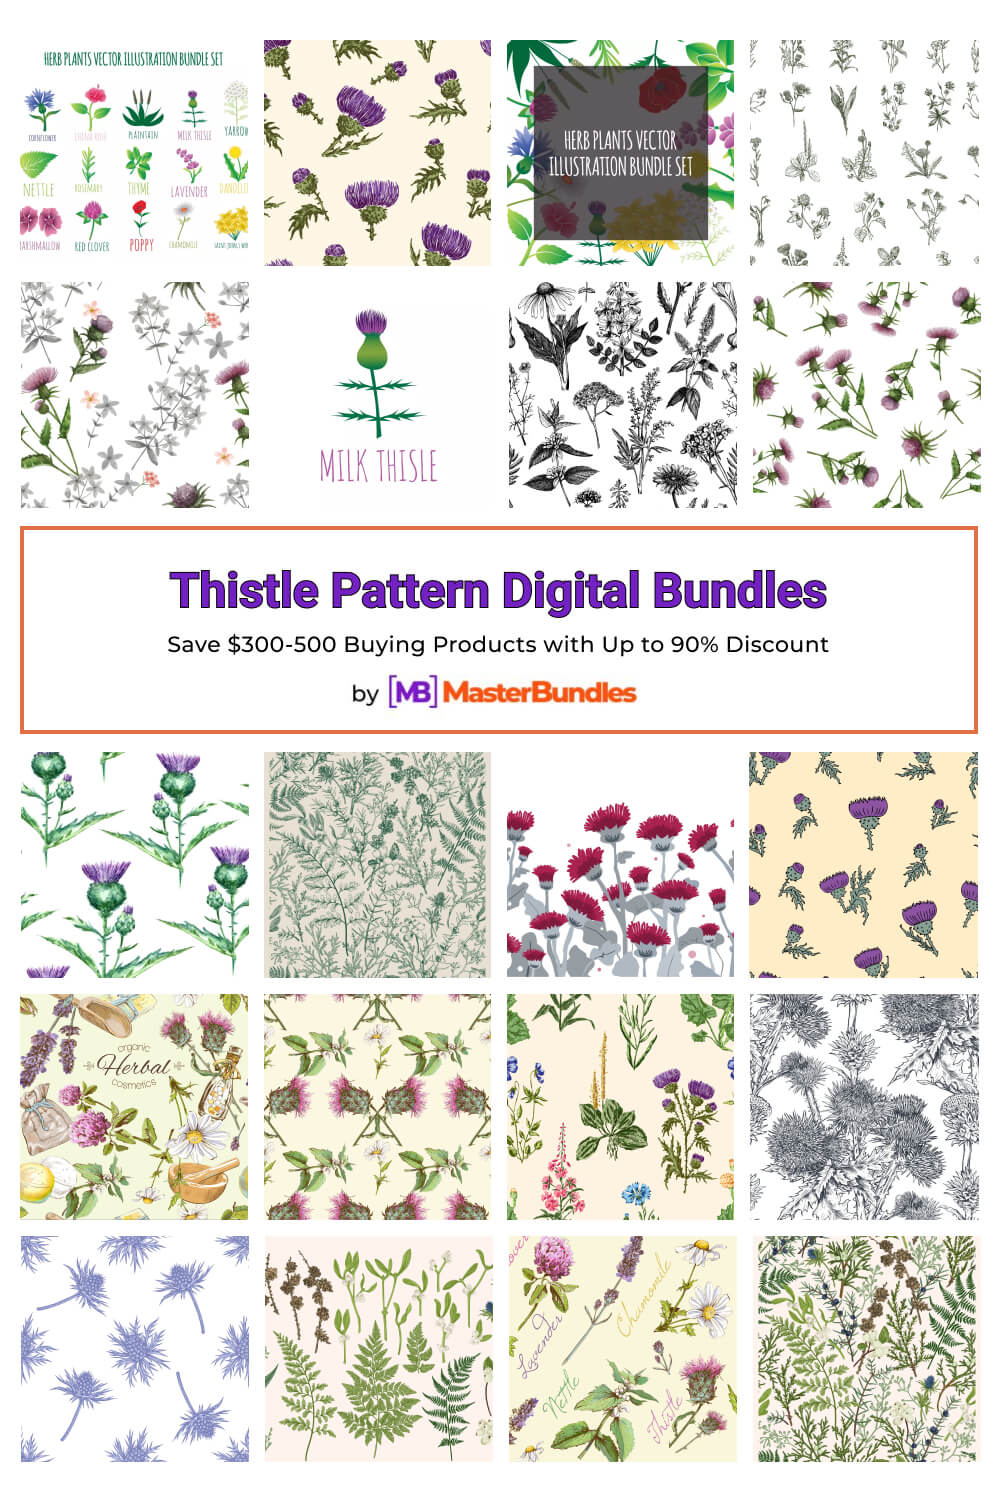 thistle pattern digital bundles pinterest image.